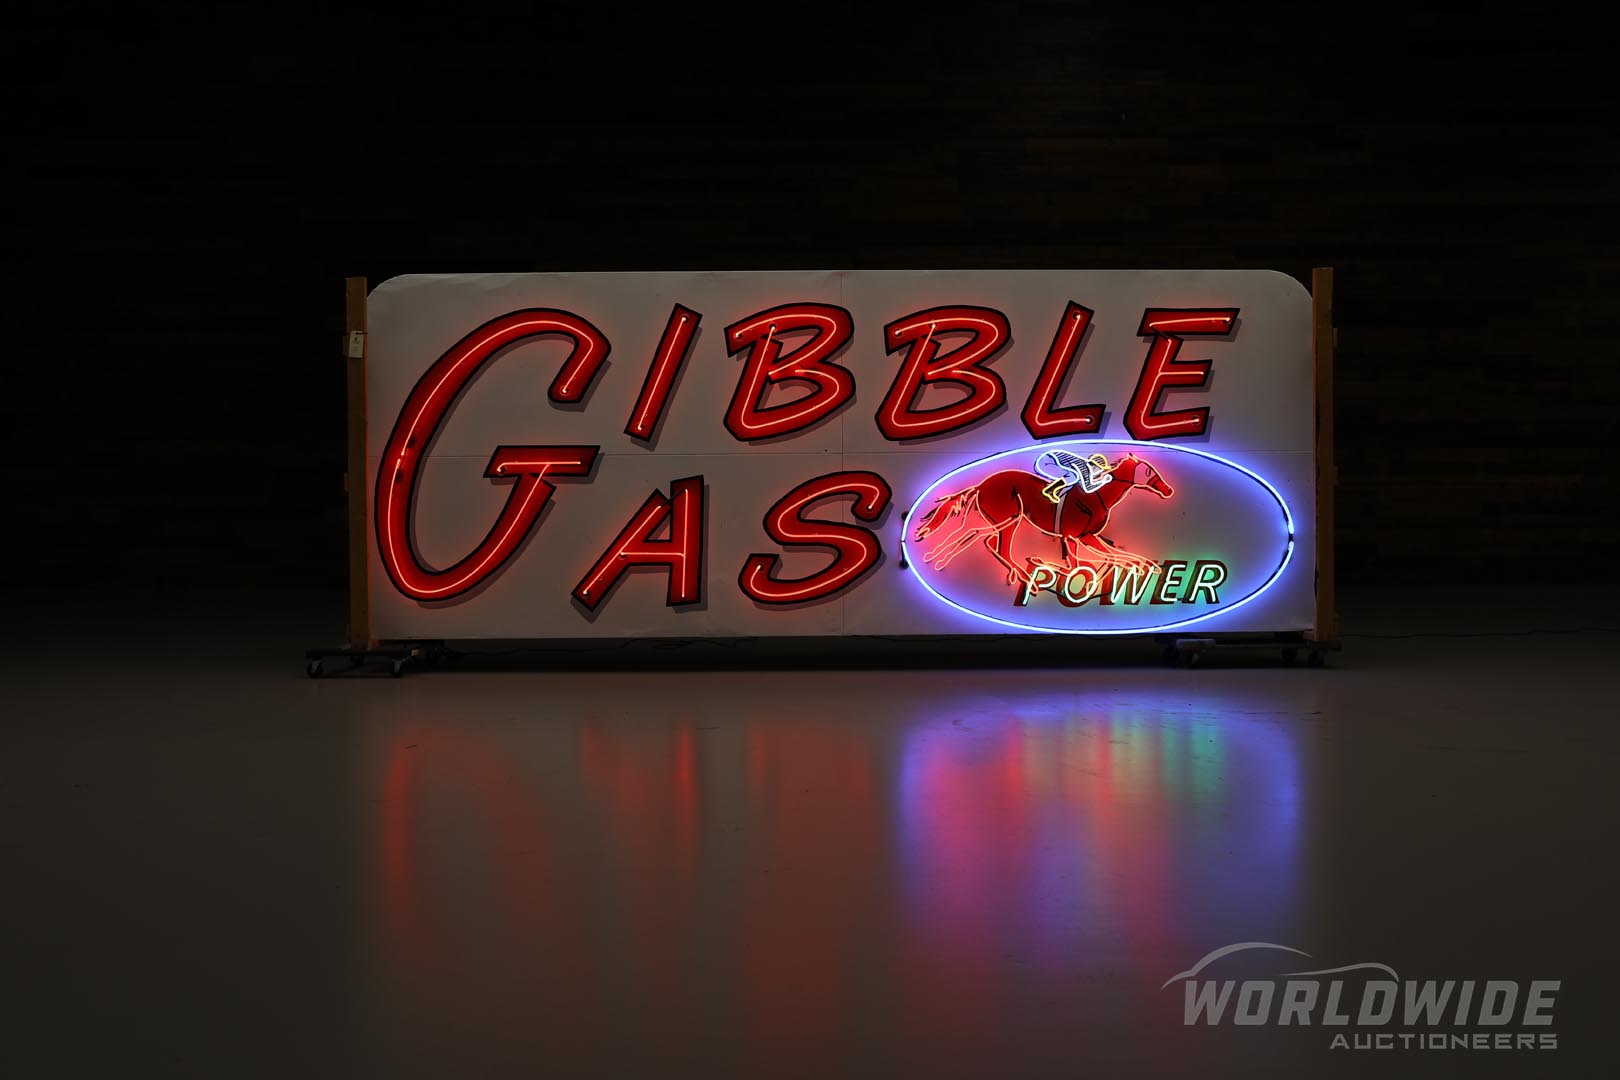  Original Large Gibble Gas Anim ated Neon Sign 